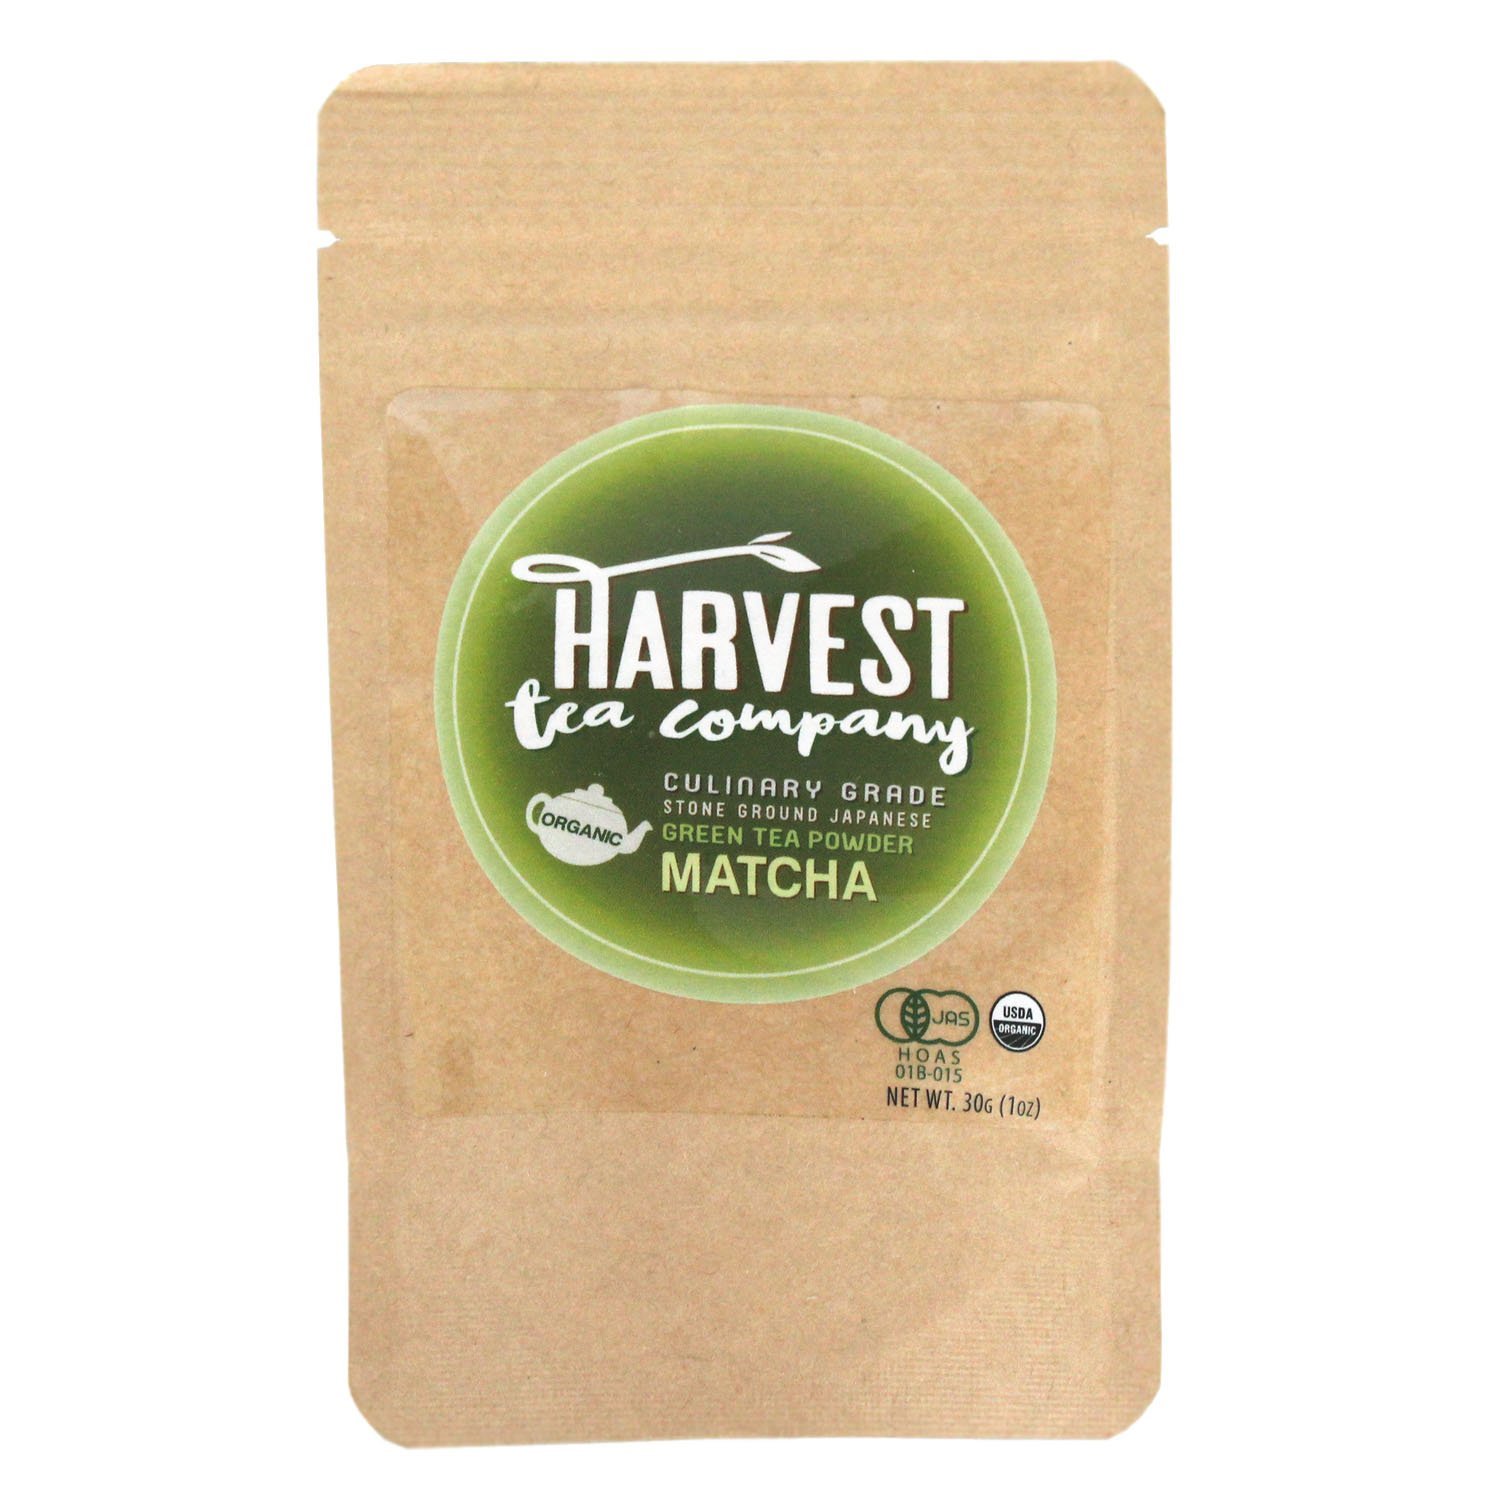 Harvest Tea Company Premium Japanese Organic Culinary Matcha Green Tea Powder (30g | 1oz)